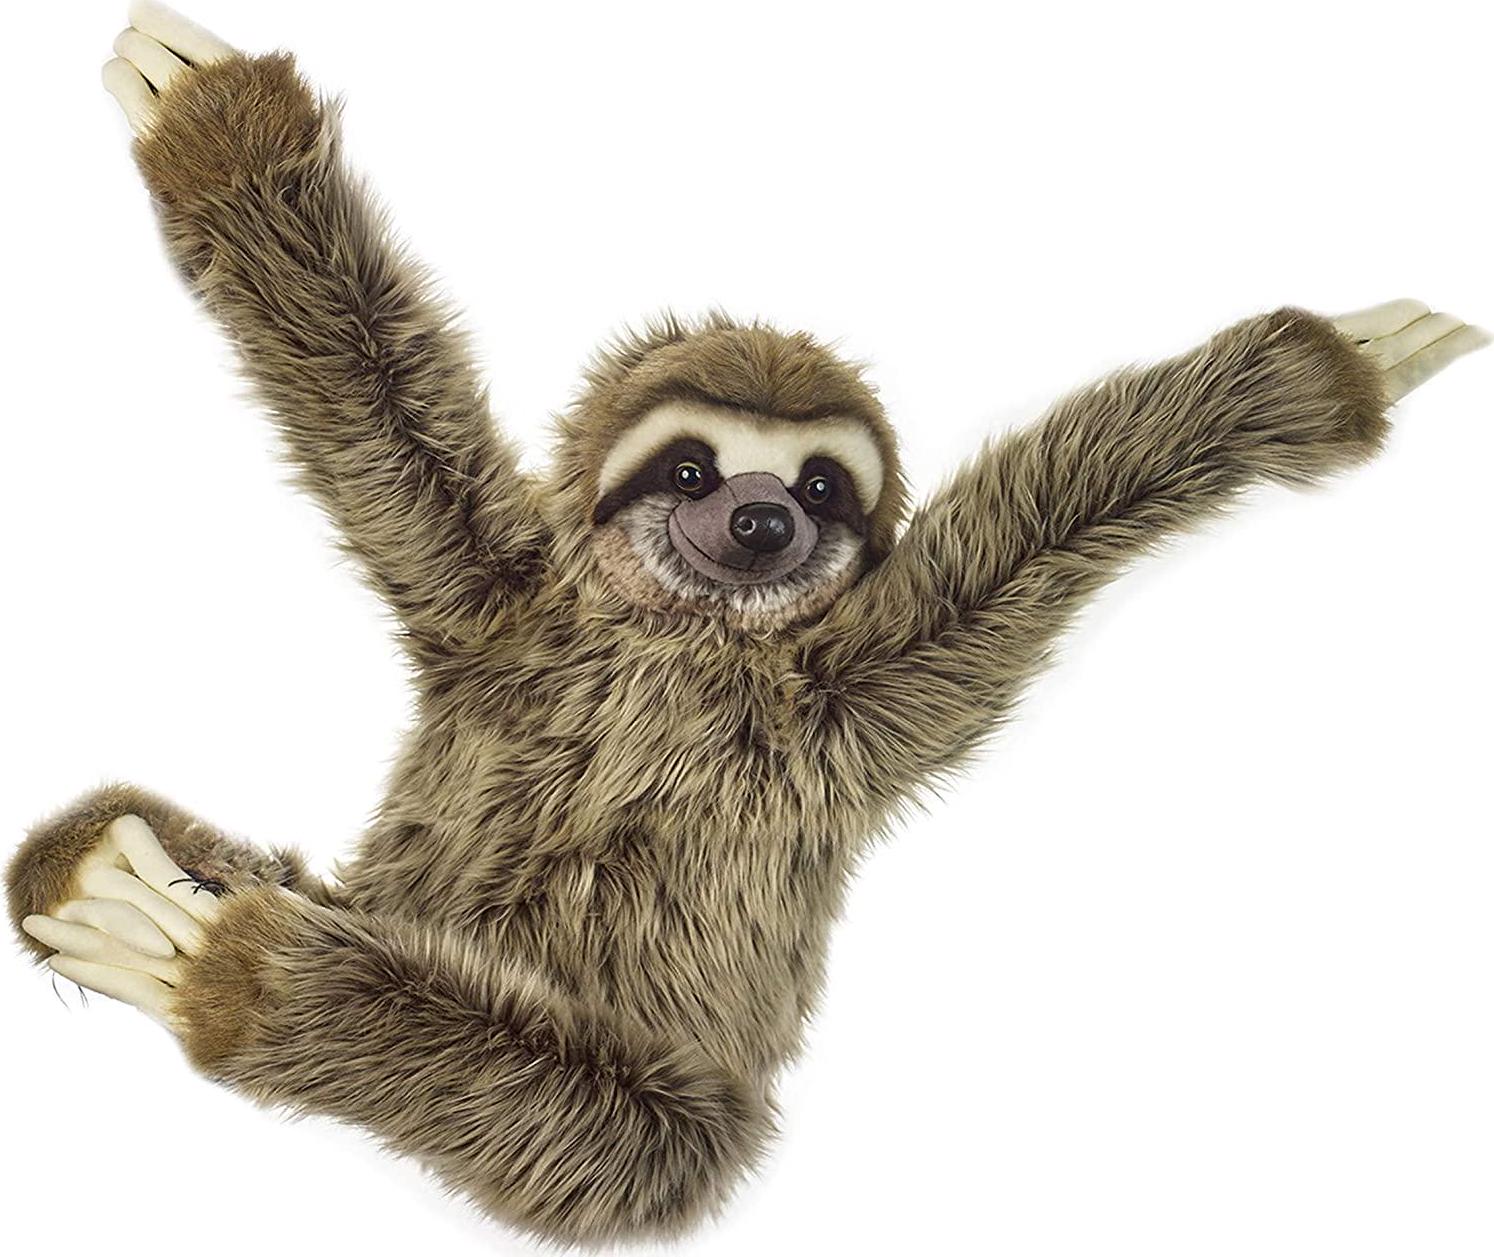 Venturelli, Lelly - National Geographic Plush, Giant Sloth